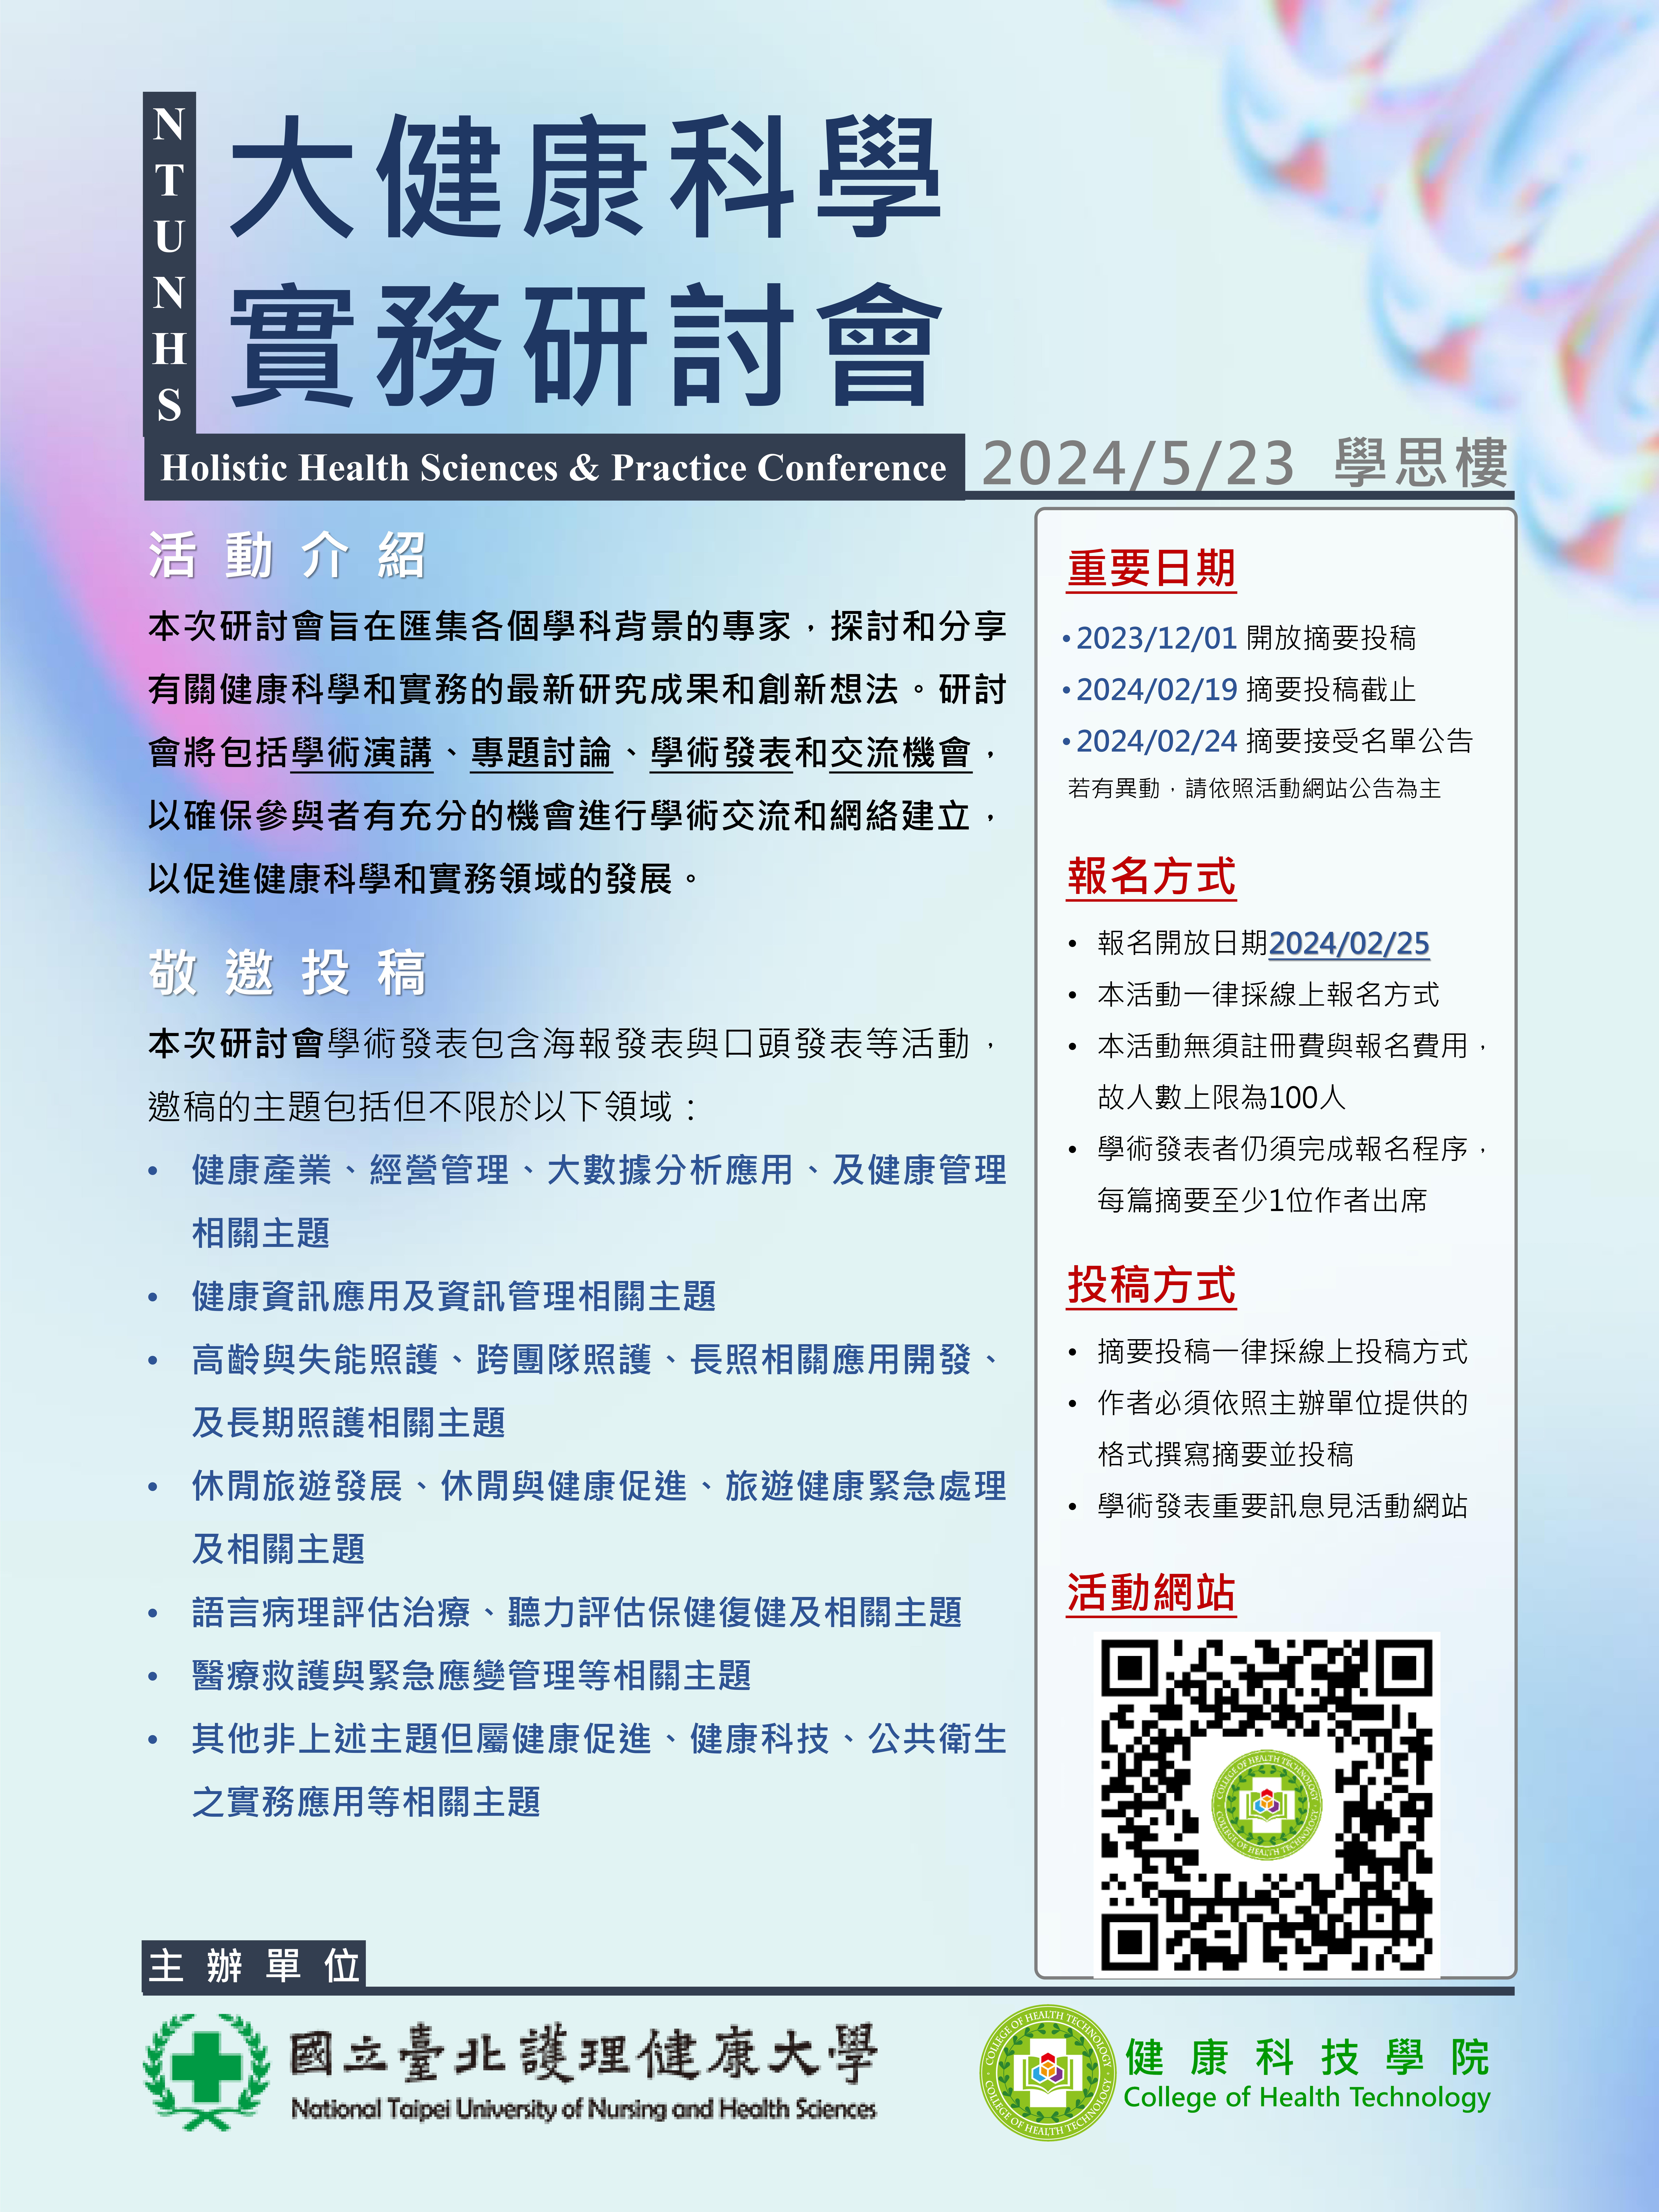 Featured image for “2023.12.15 【國立臺北護理健康大學訊息－2024大健康科學實務研討會】”